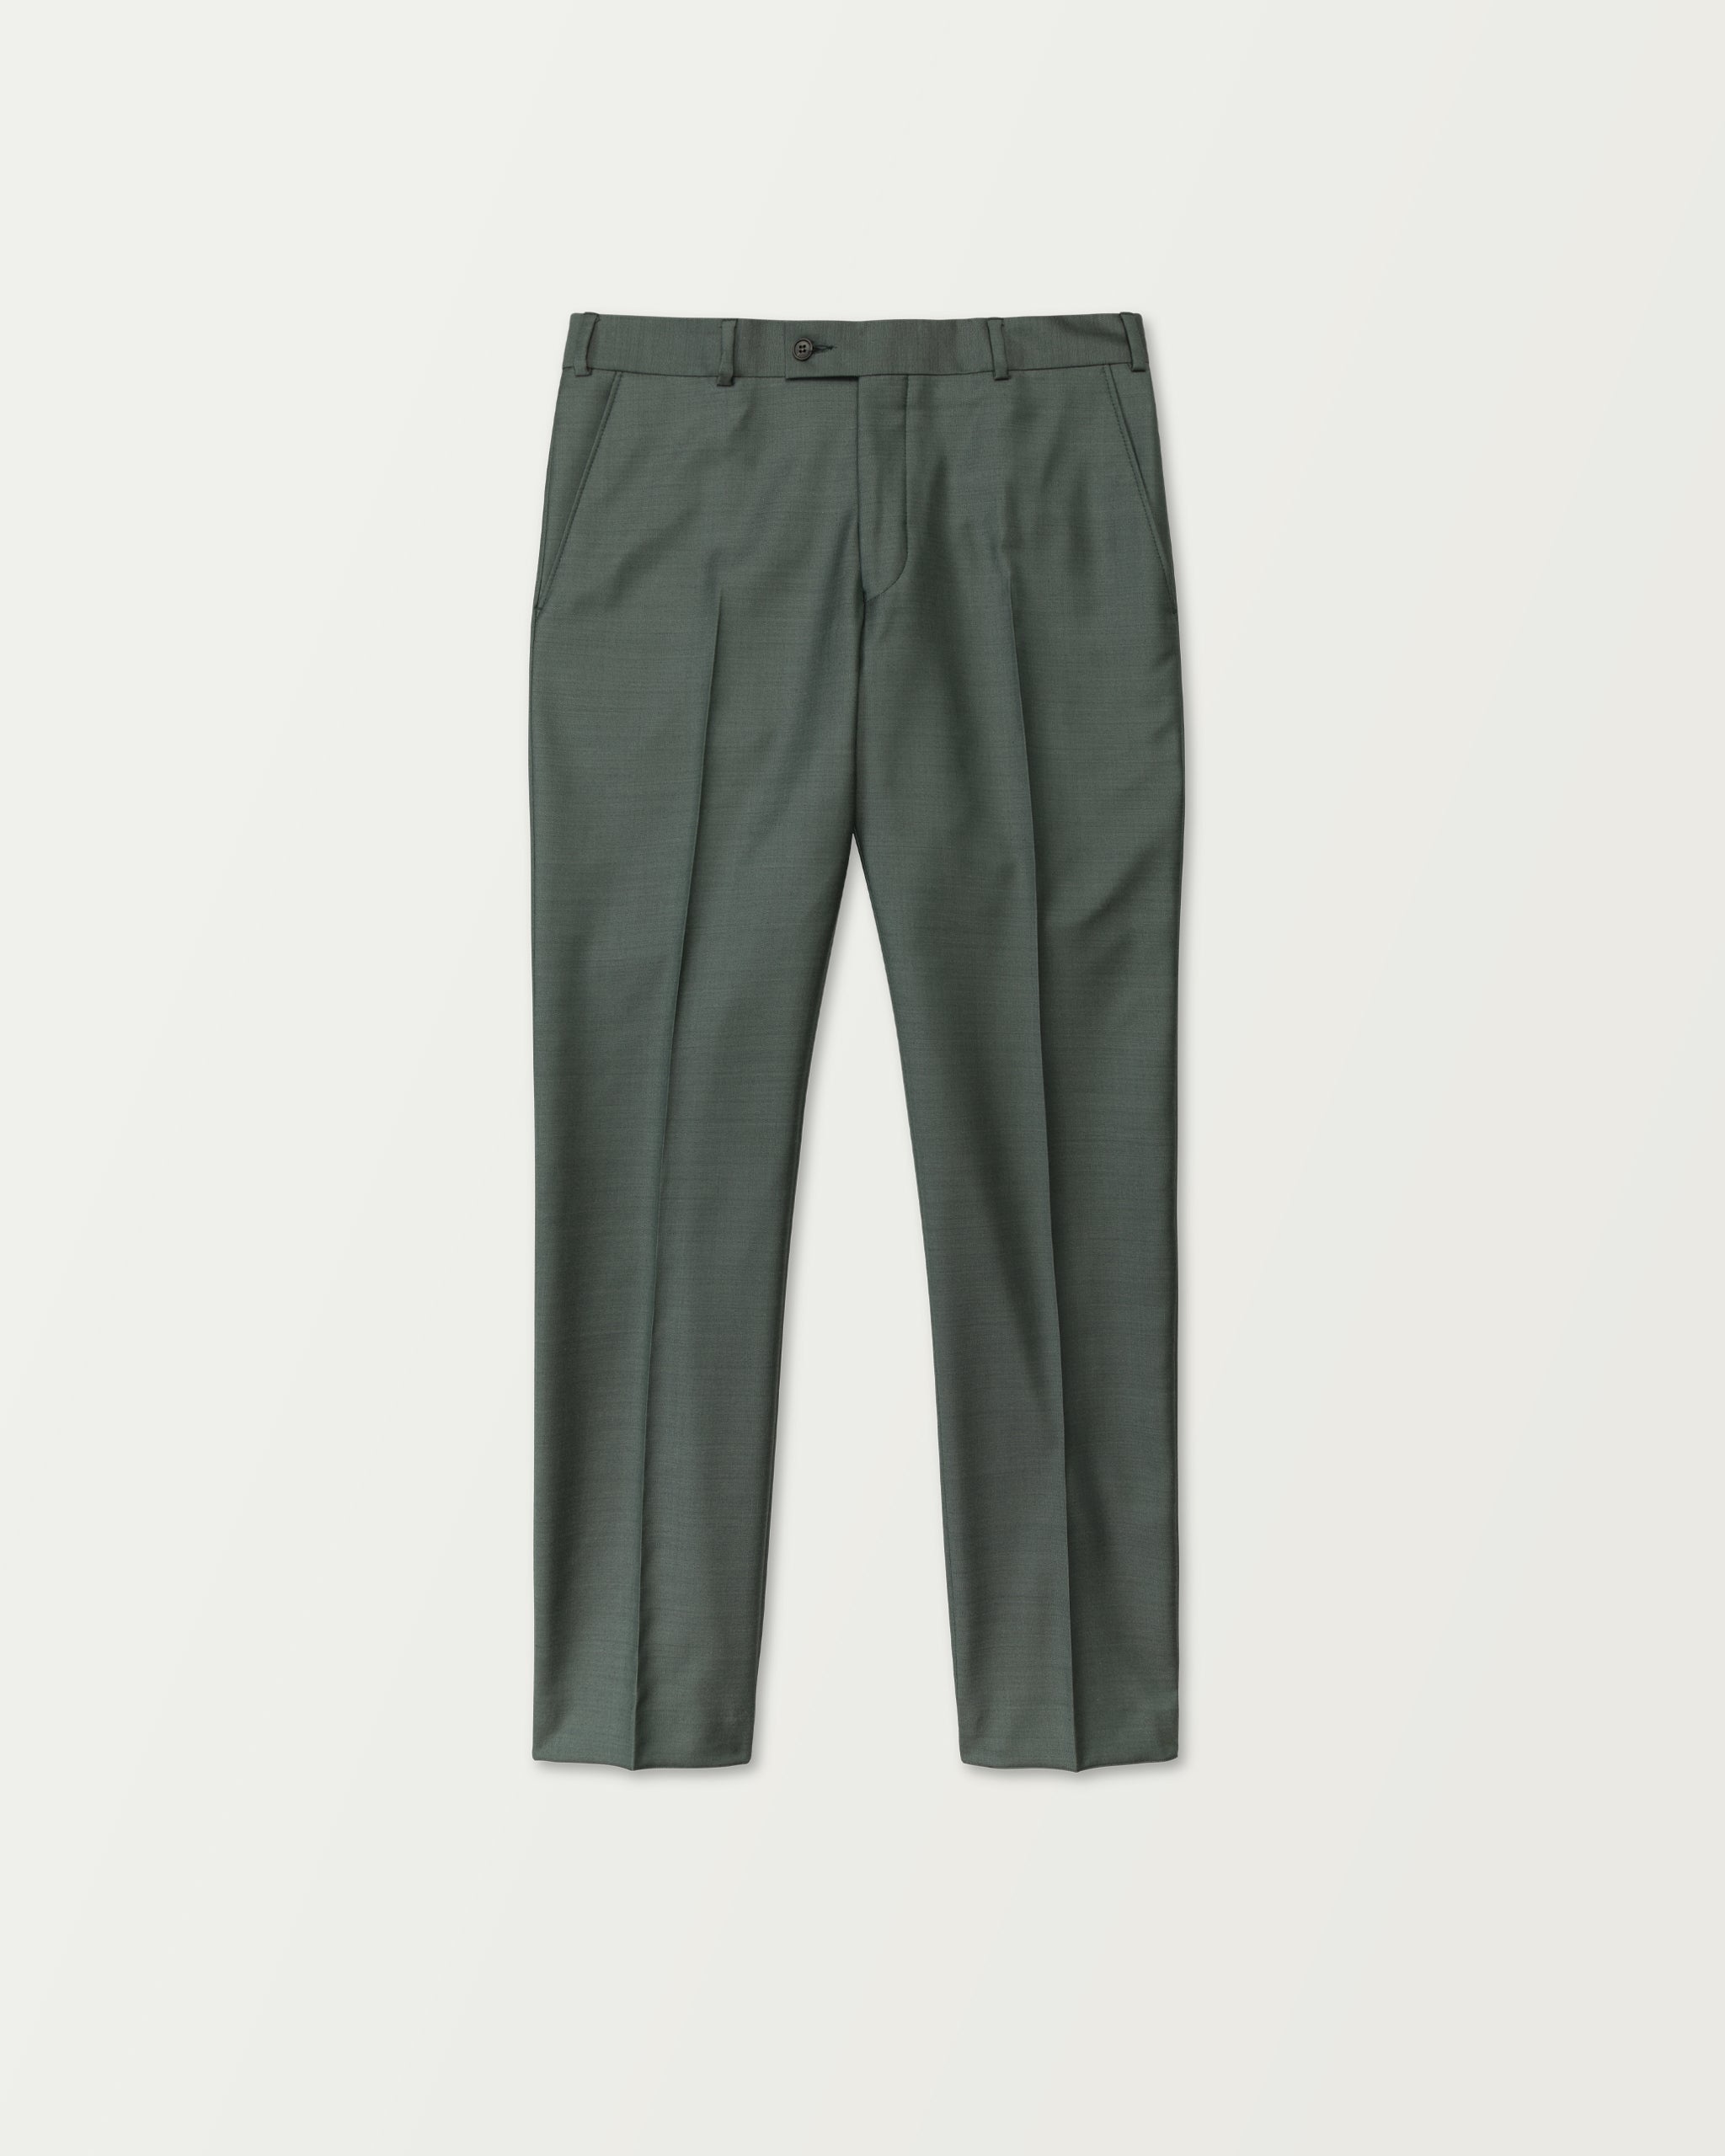 Turo - Green Premium Wool Suit in Modern Fit Trousers 